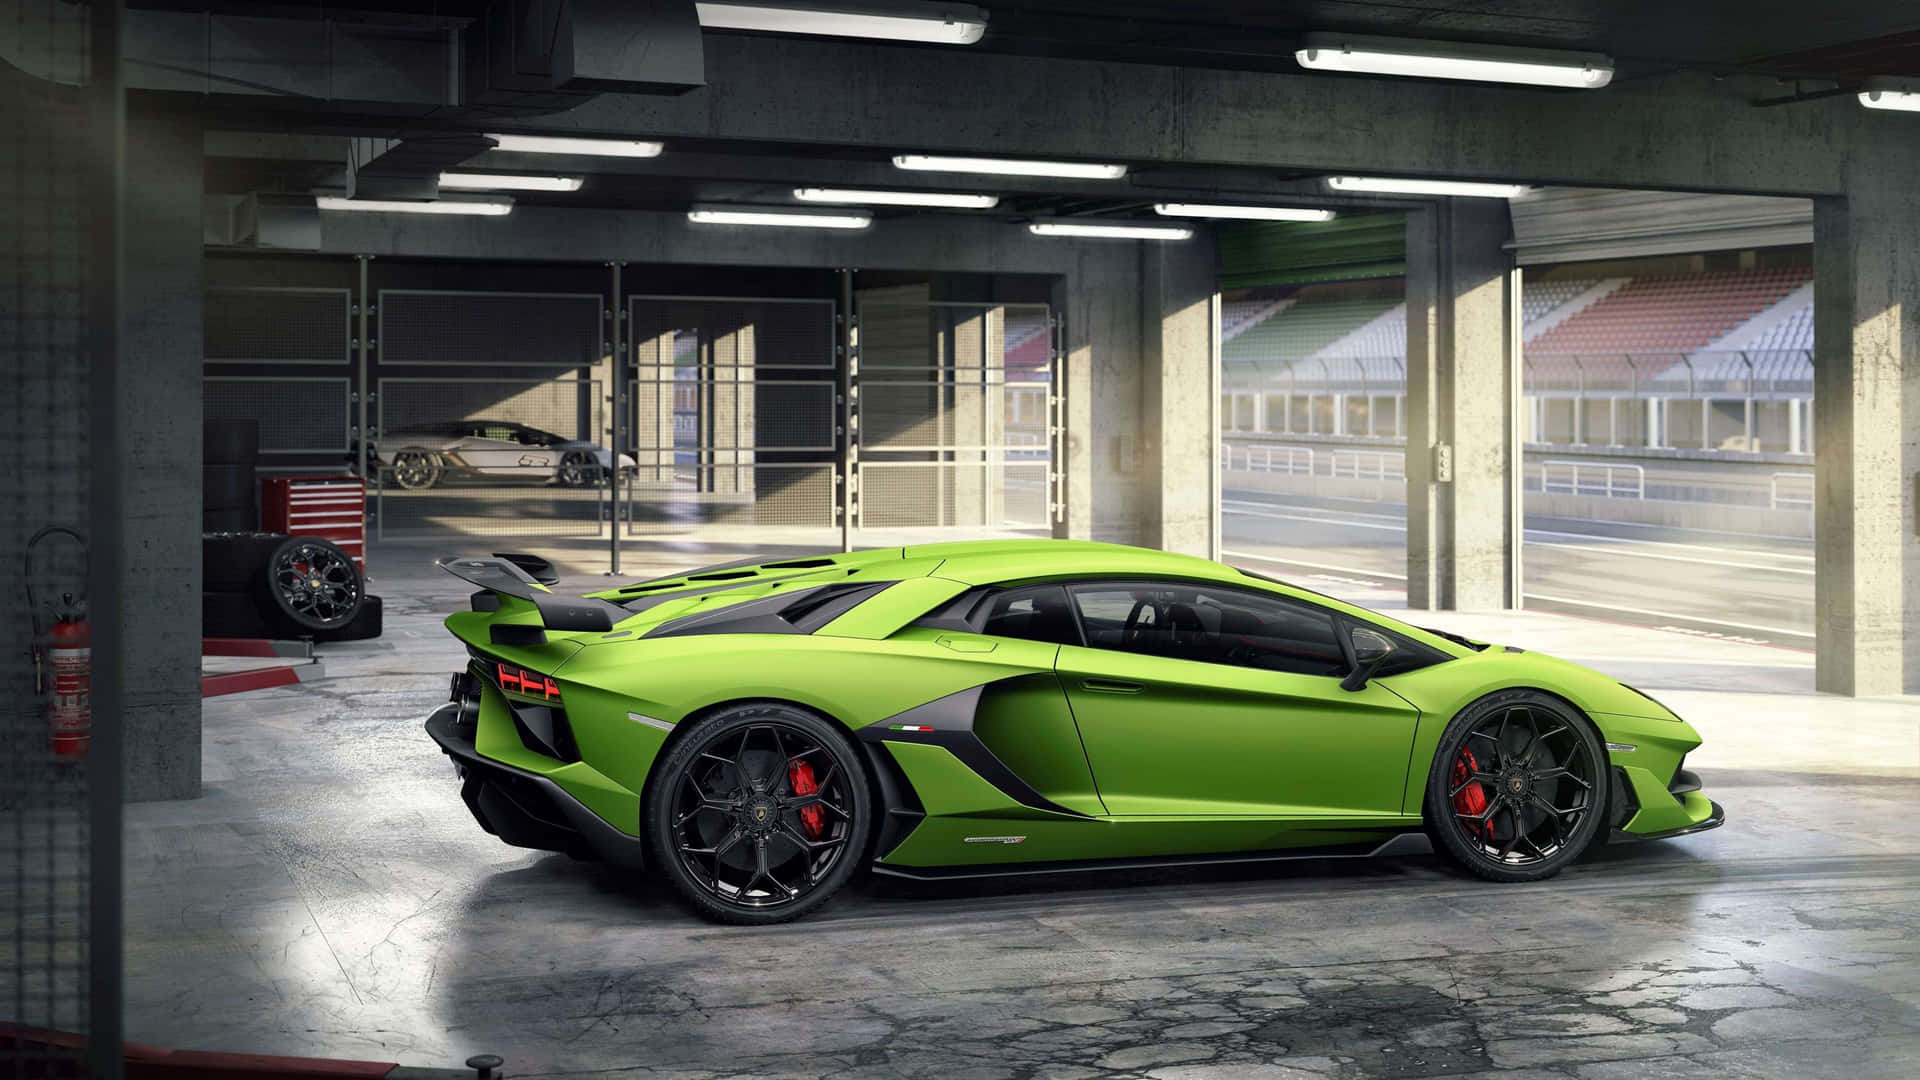 Make a statement with this beautiful 4K Lamborghini